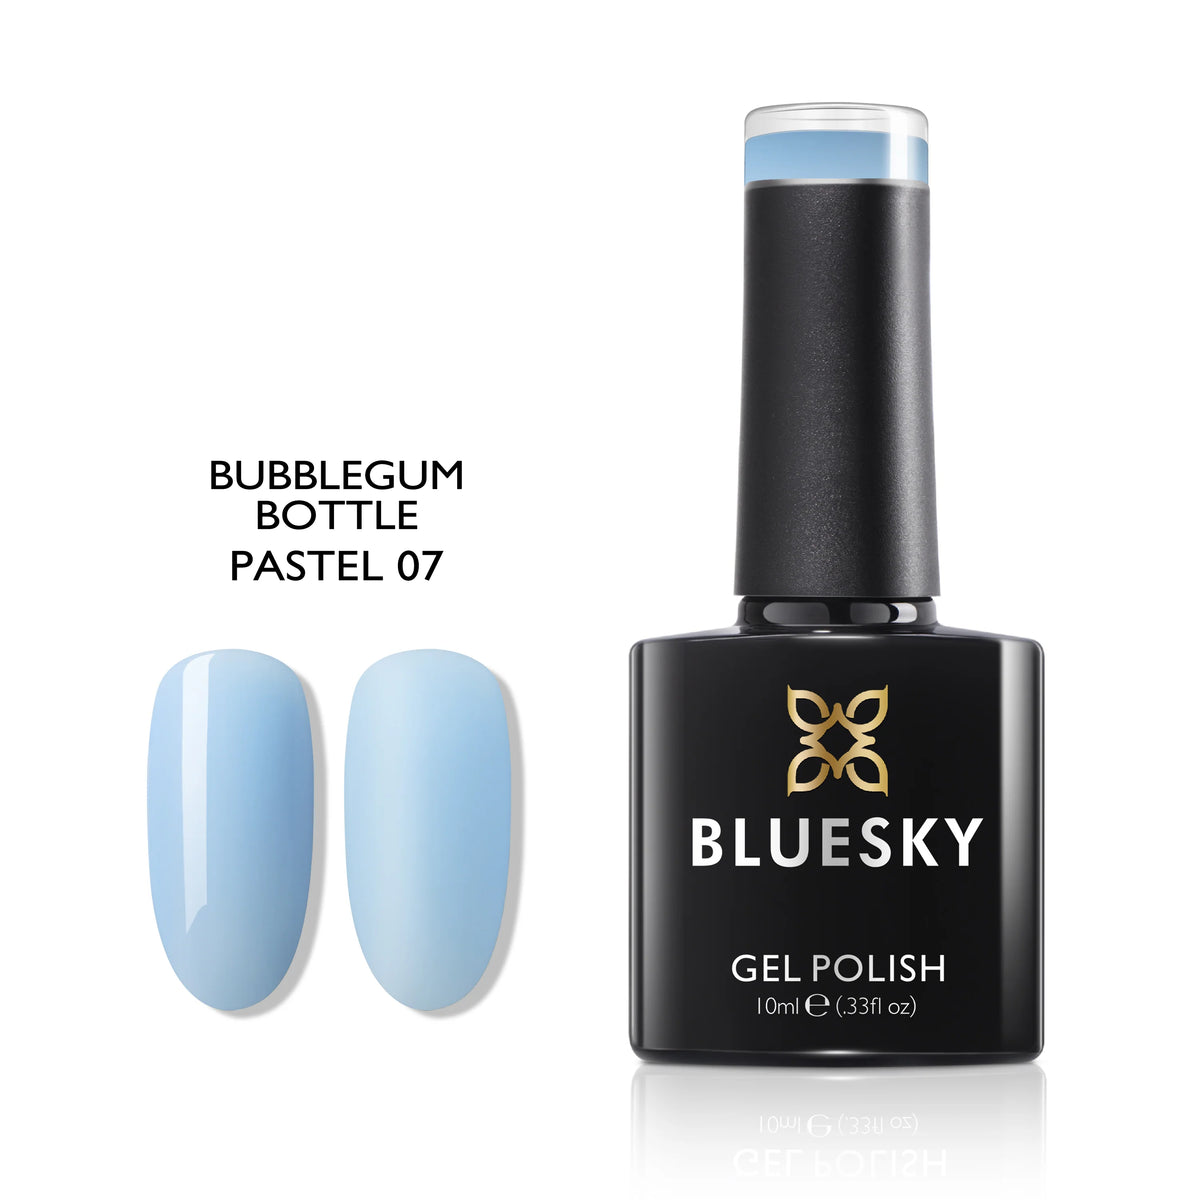 Bluesky Gel Polish-Bubblegum Bottle-Pastel 07